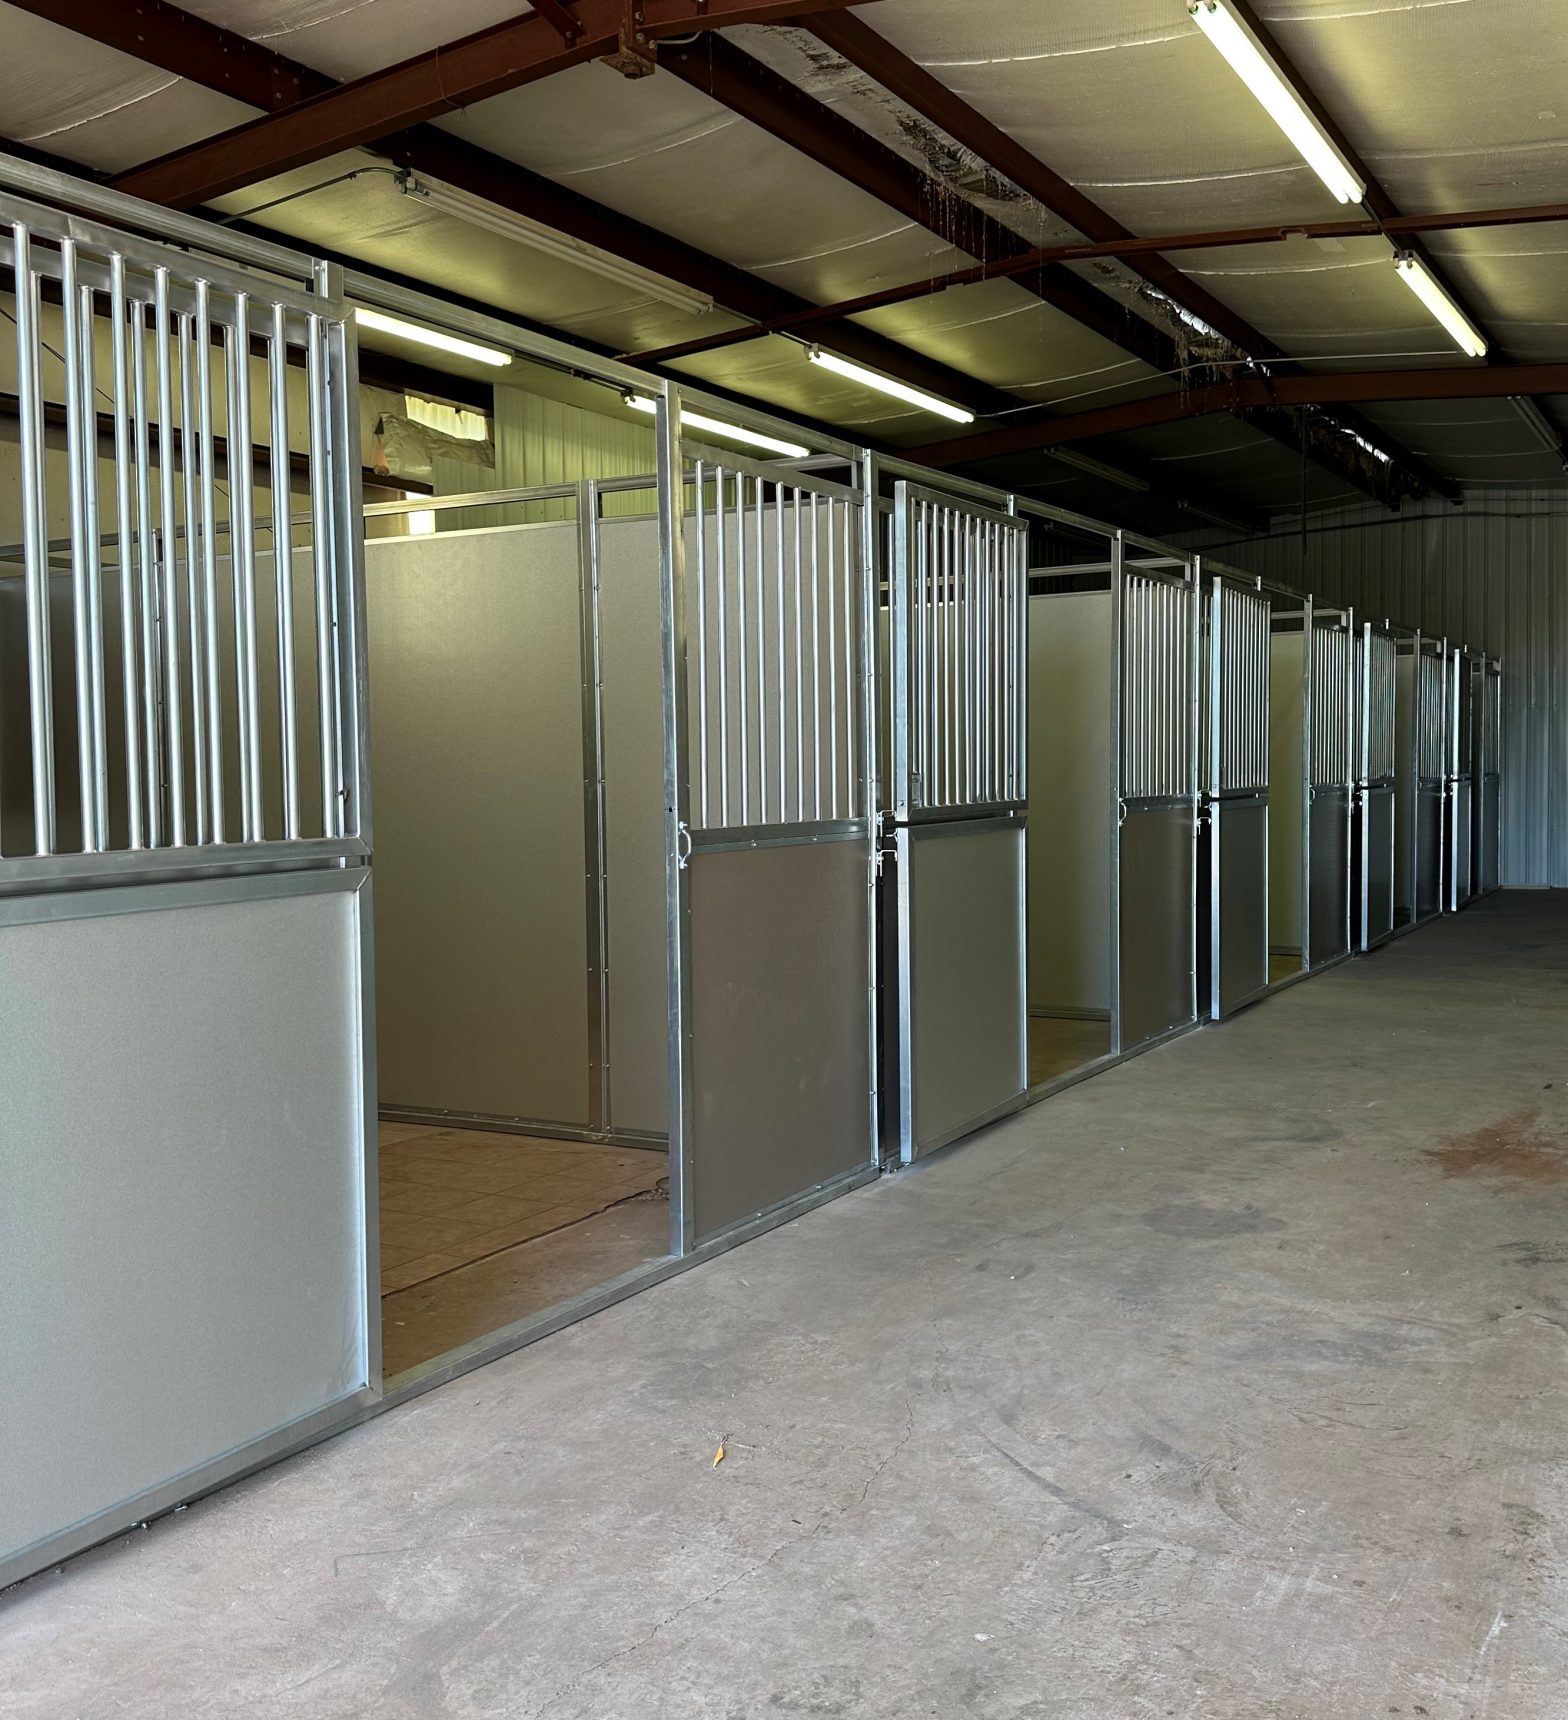 6 stall horse barn plans